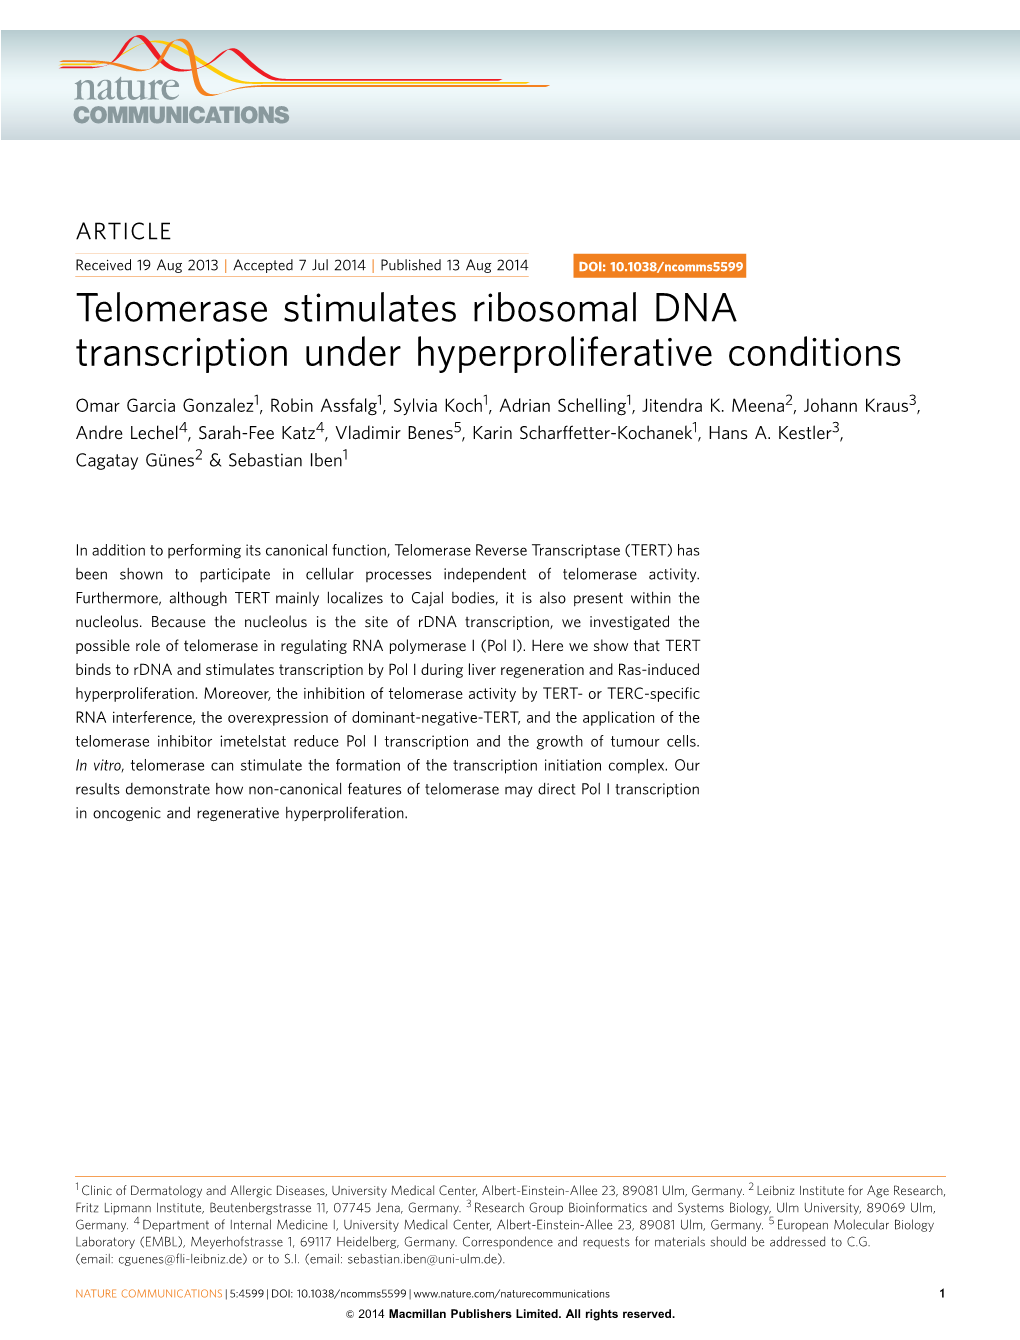 Telomerase Stimulates Ribosomal DNA Transcription Under Hyperproliferative Conditions